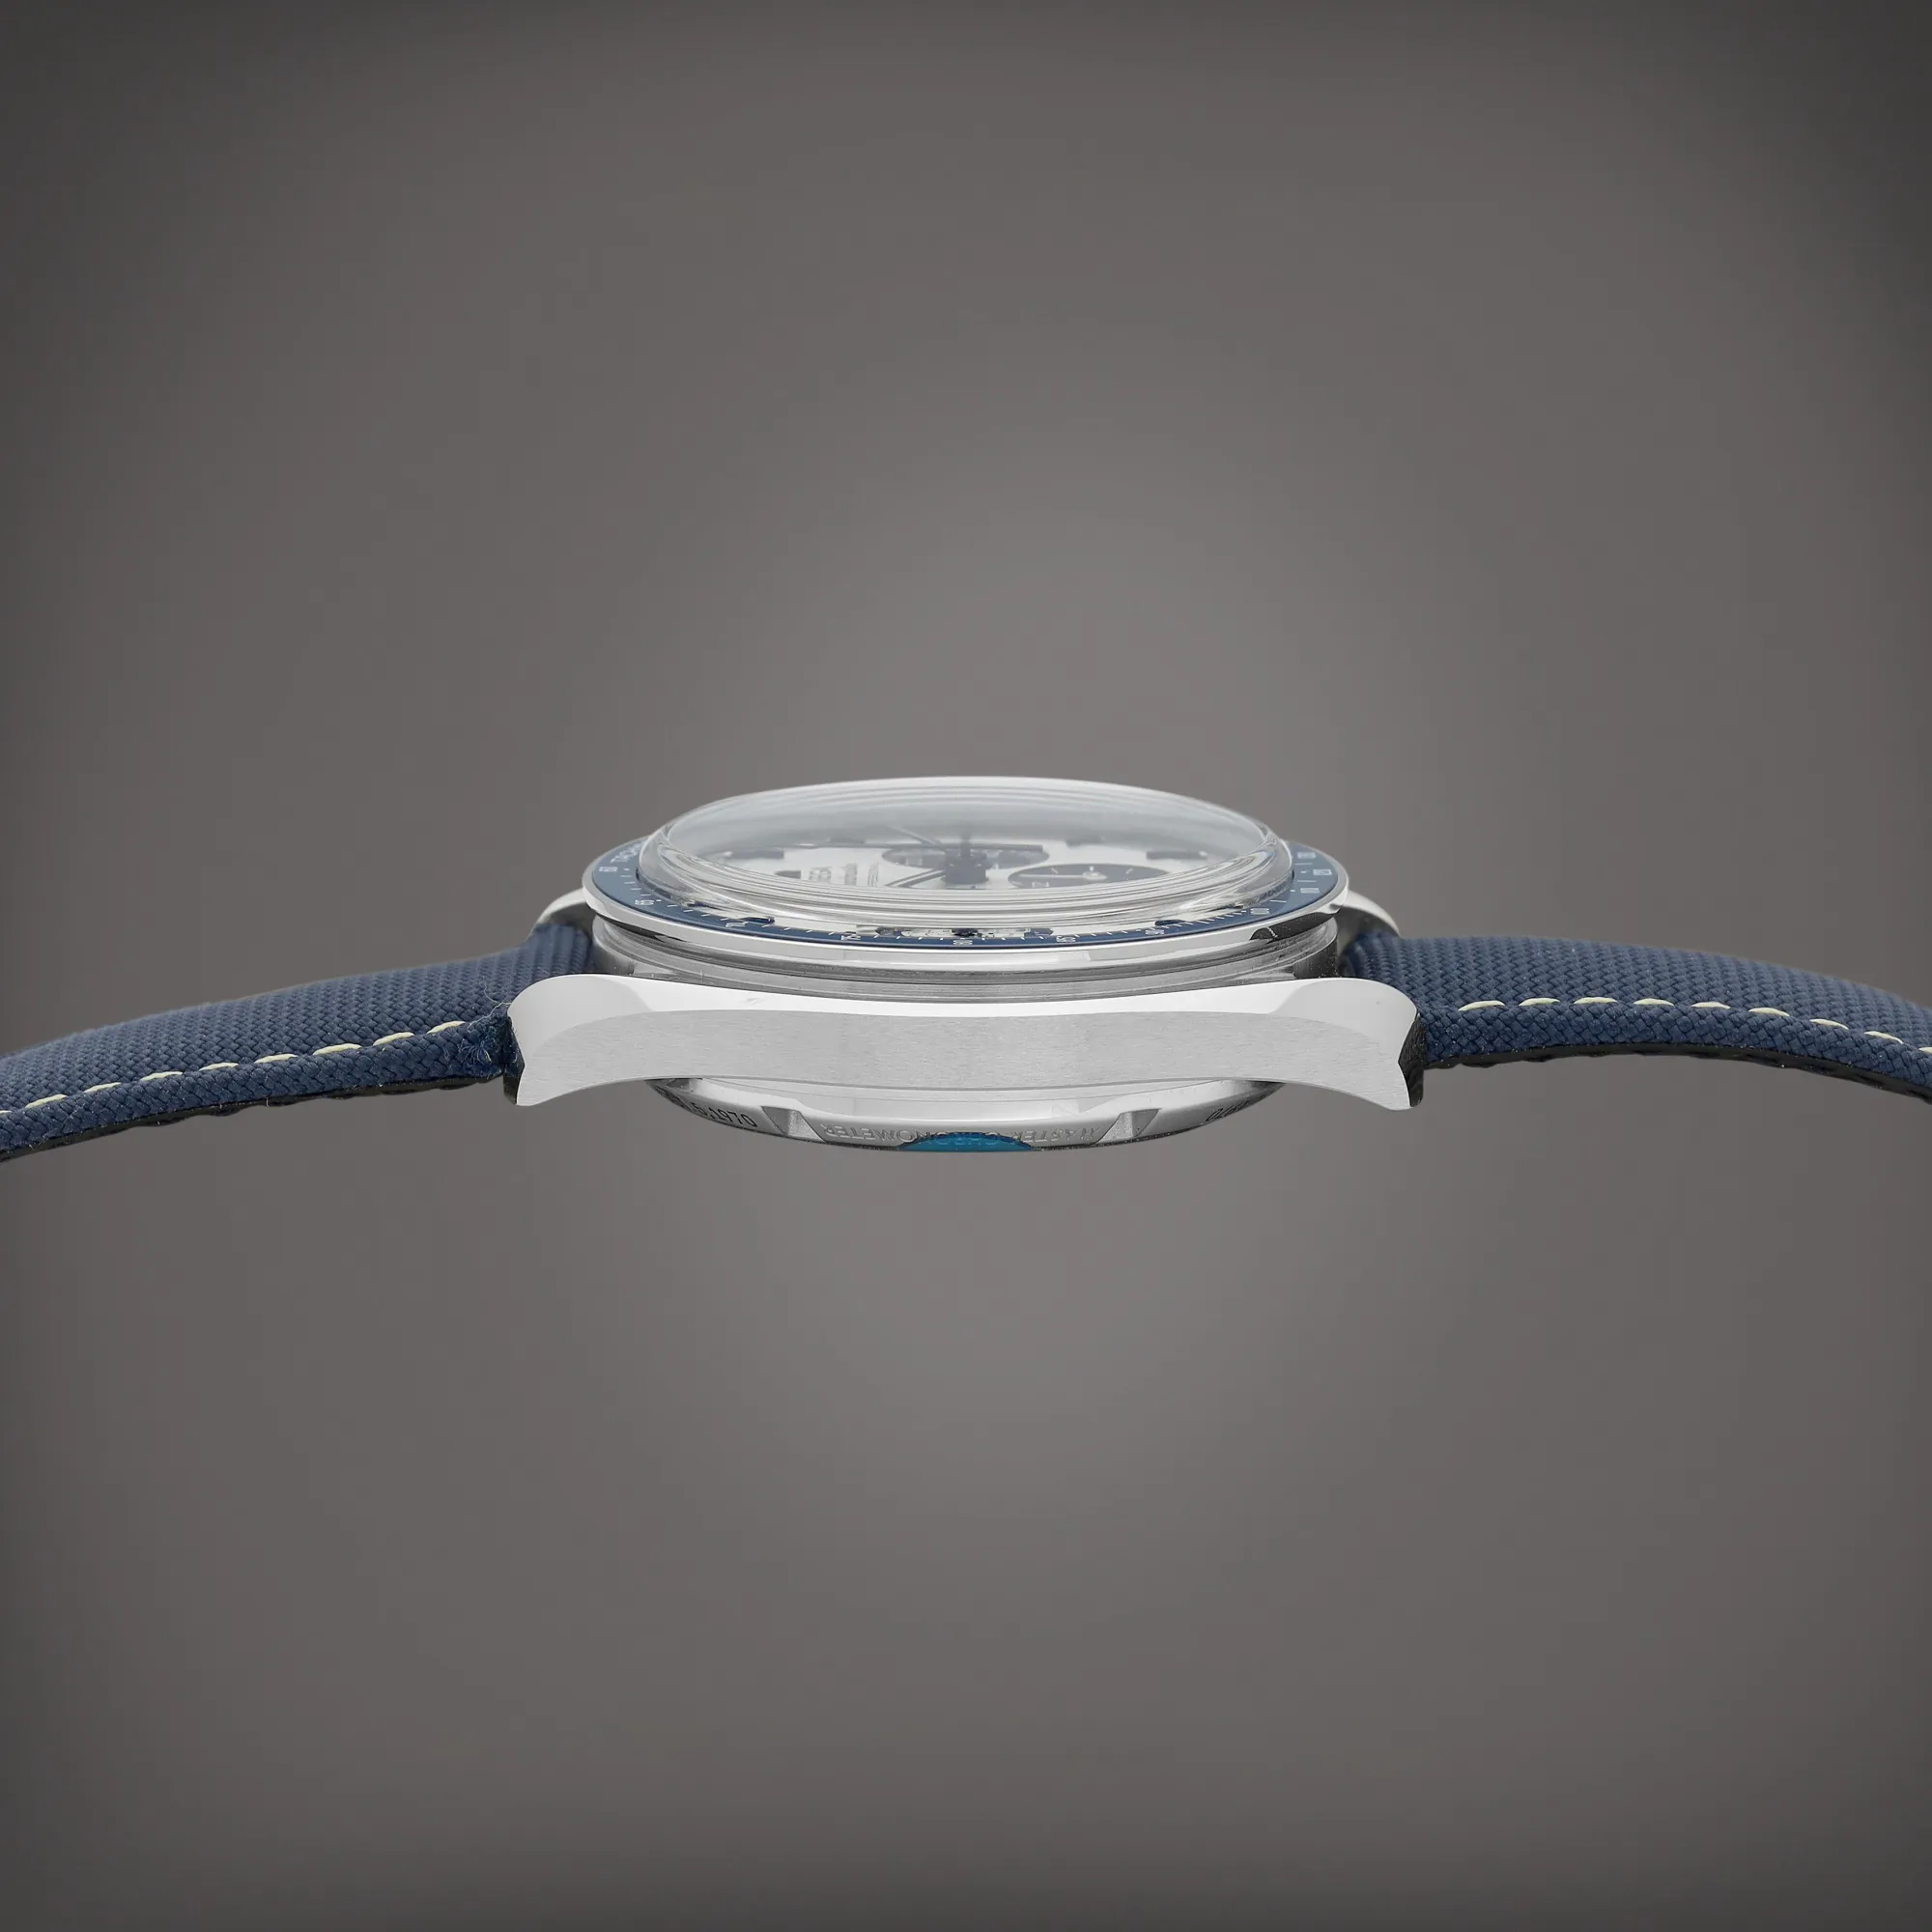 Omega Speedmaster Moon watch 310.32.42.50.02.001 42mm Stainless steel Silver 3